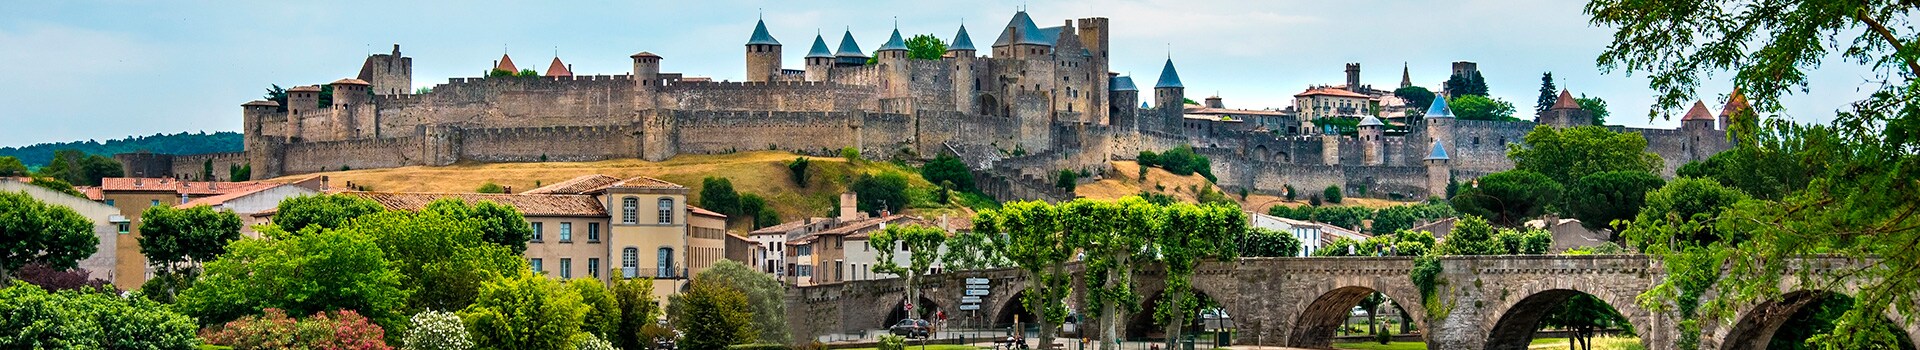 Porto - Carcassonne